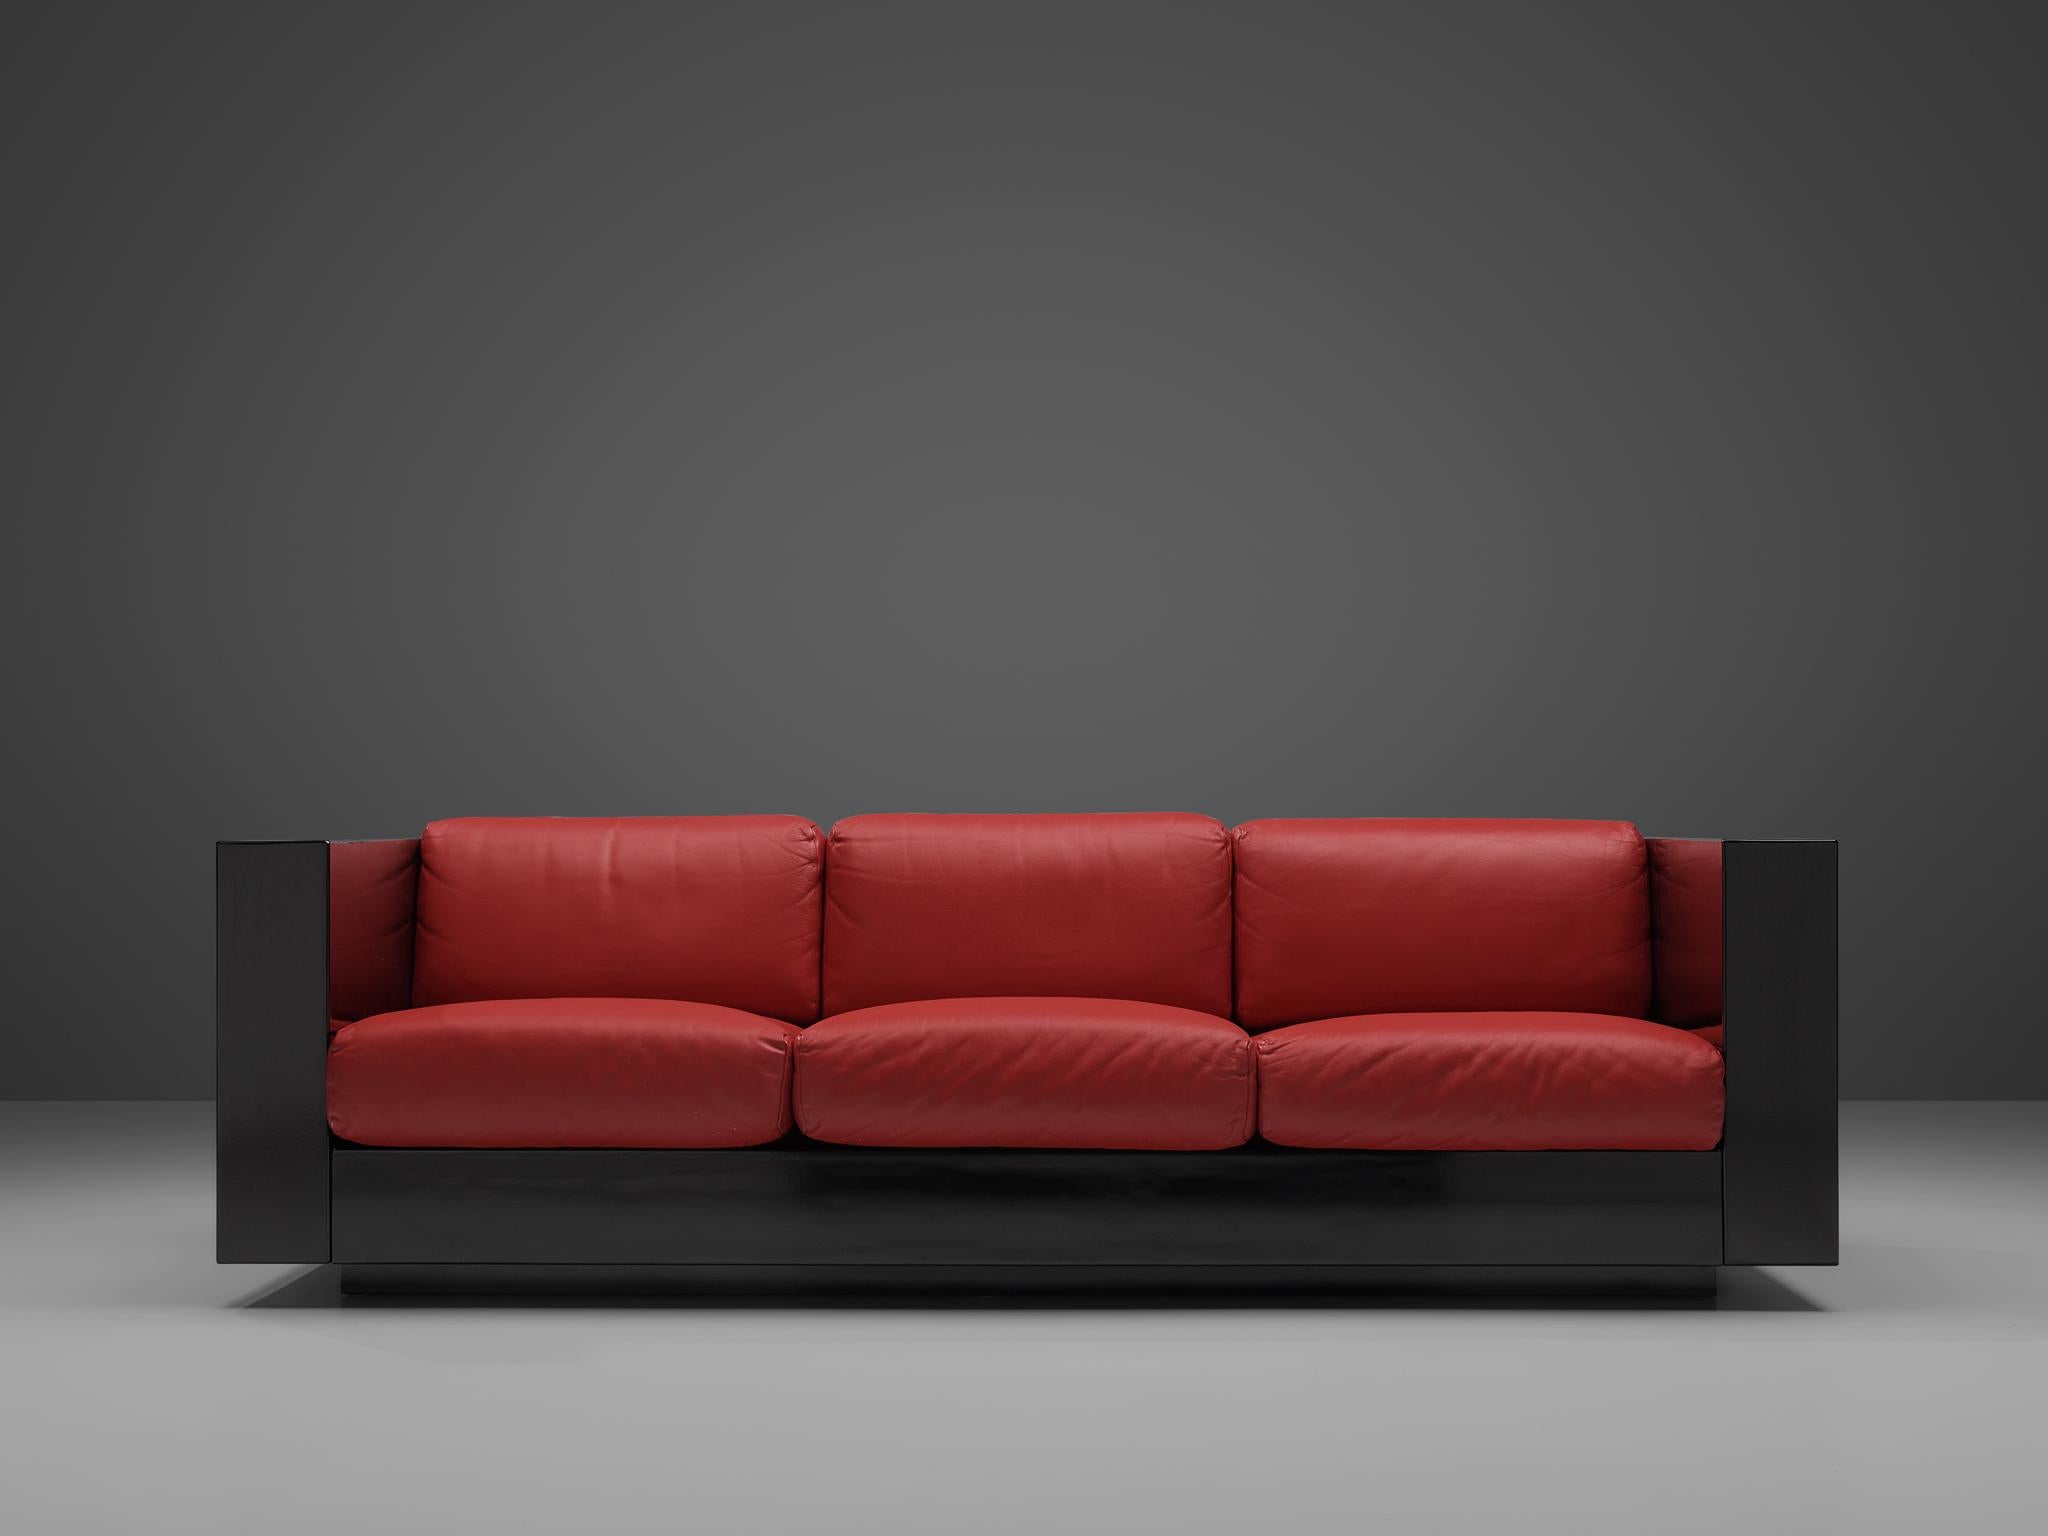 Massimo and Lella Vignelli for Poltronova, 'Saratoga' three-seat sofa, polyester lacquer and red leather, Italy, 1964.

This sofa named 'Saratoga' is designed by Italian designer couple Lella & Massimo Vignelli. The Vignelli's were known for their